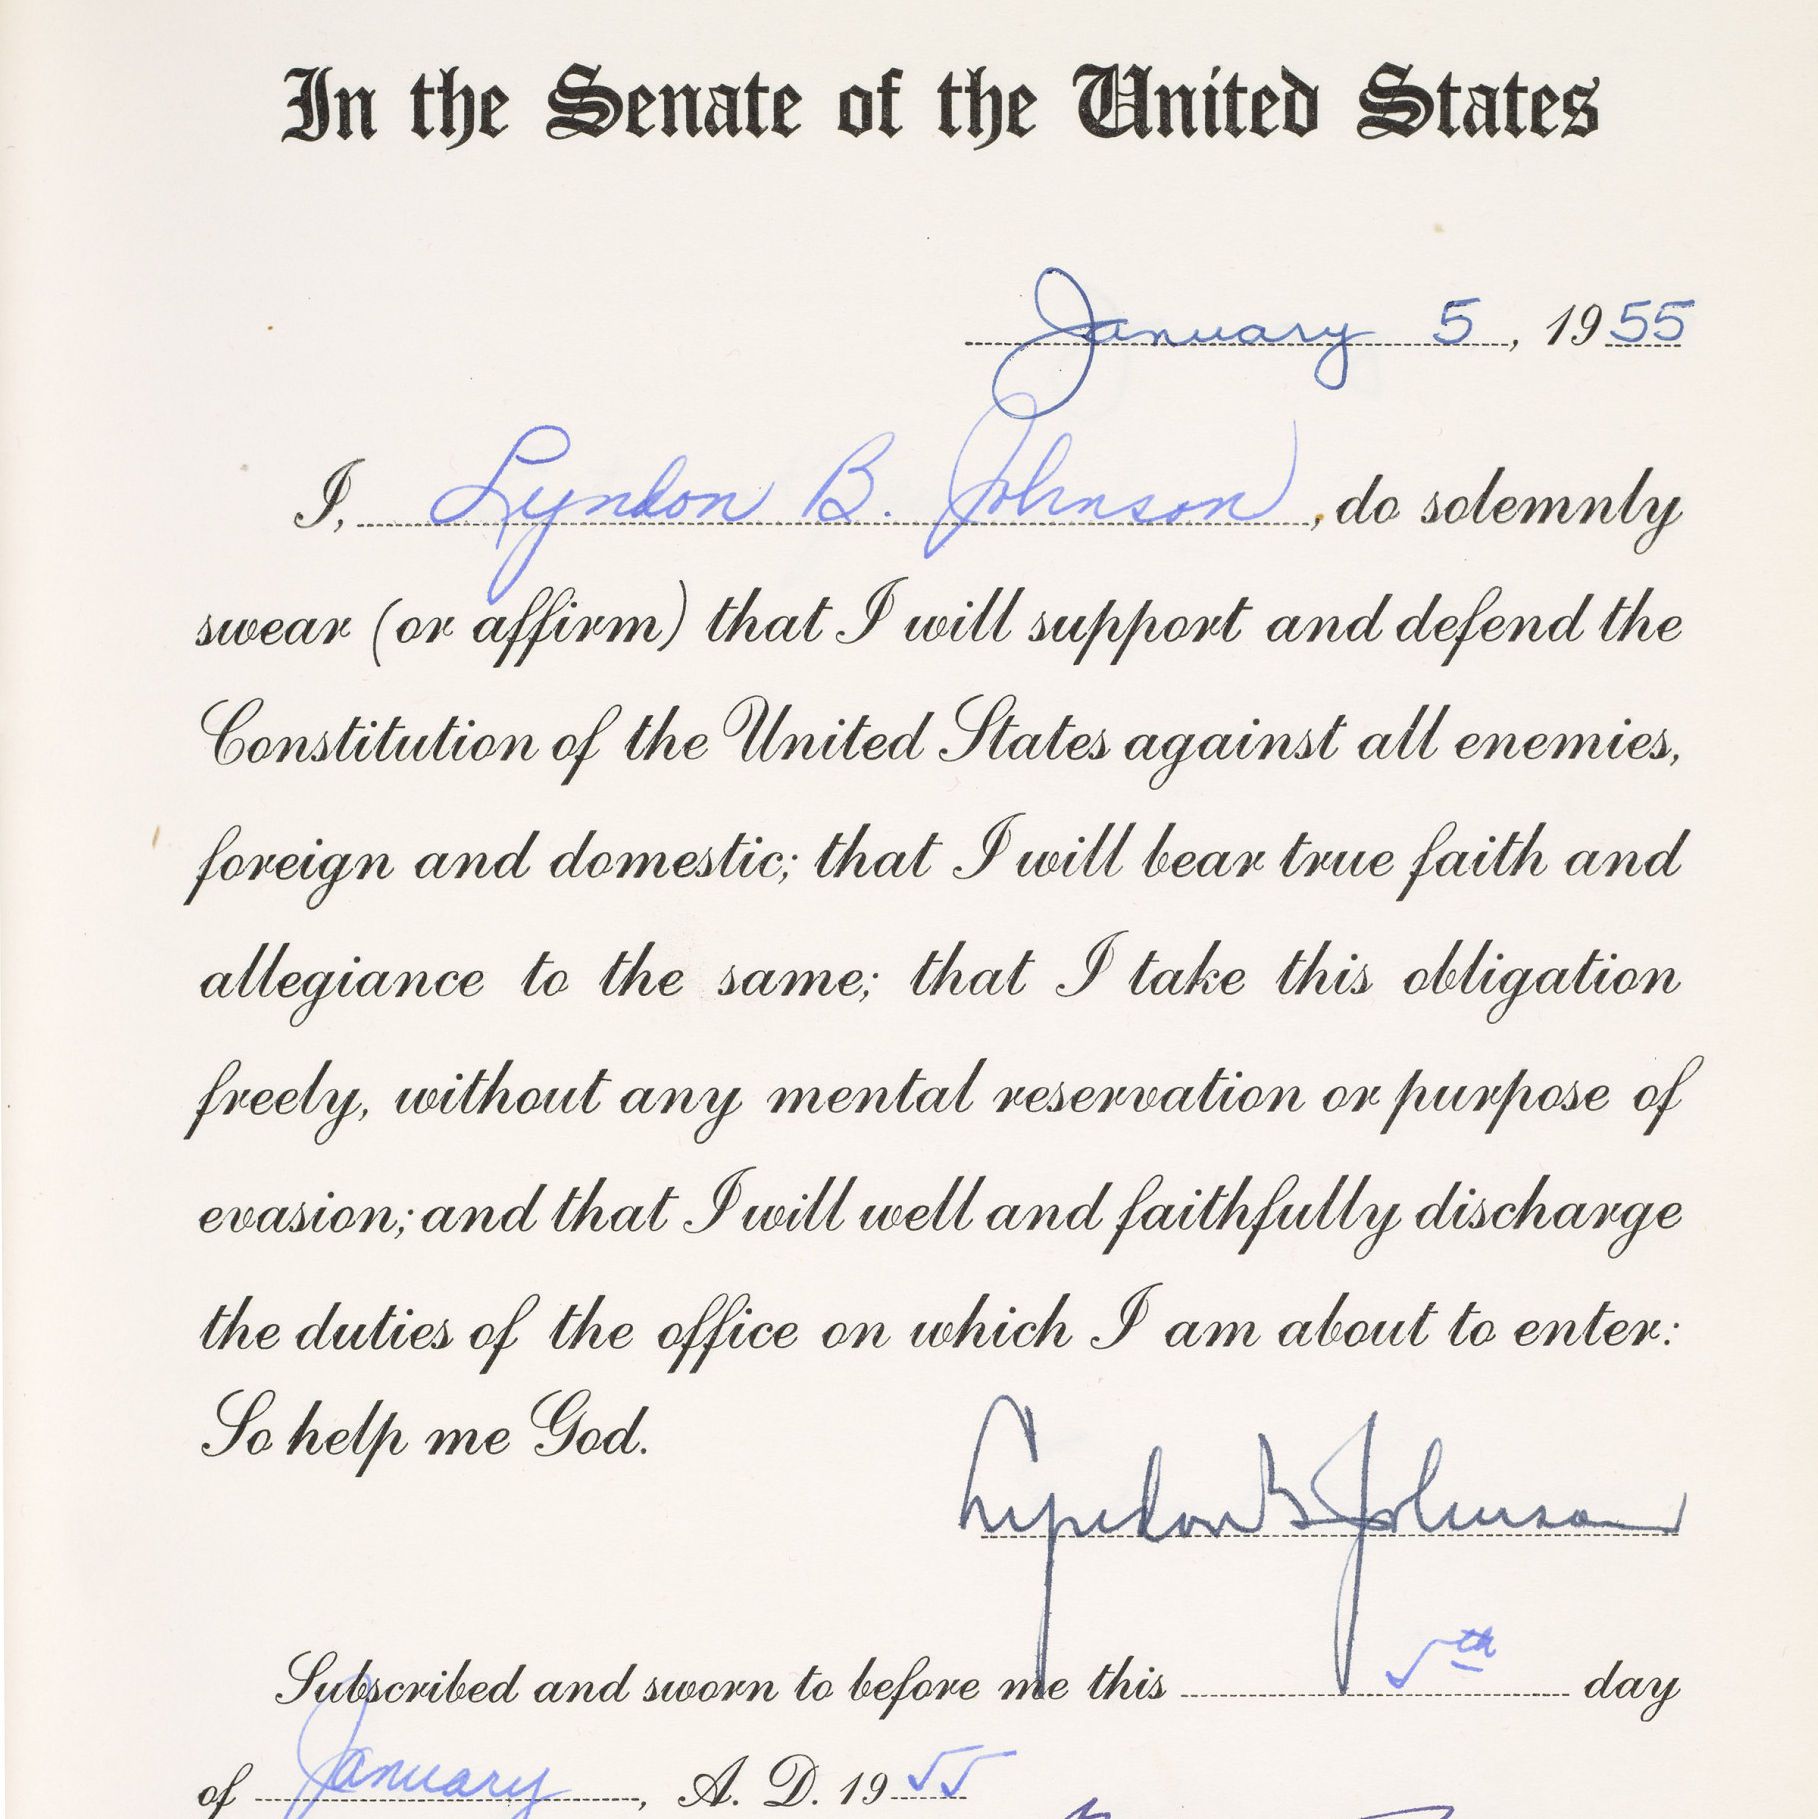 Senator Lyndon B. Johnson